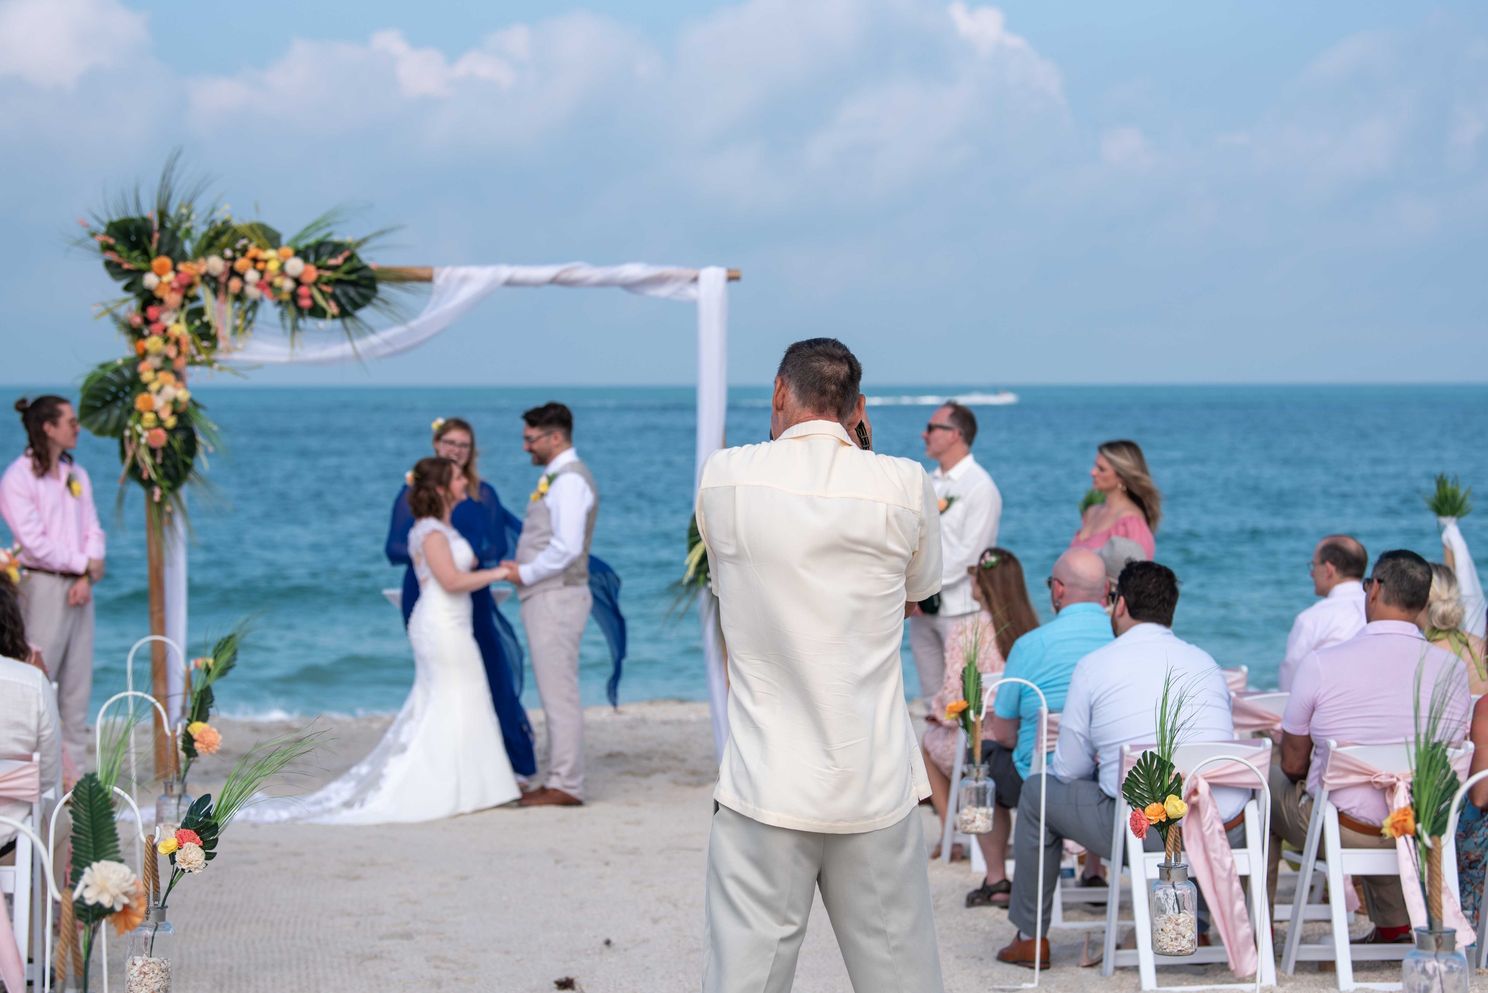 Mike photographs a wedding ceremony on Nokomis beach